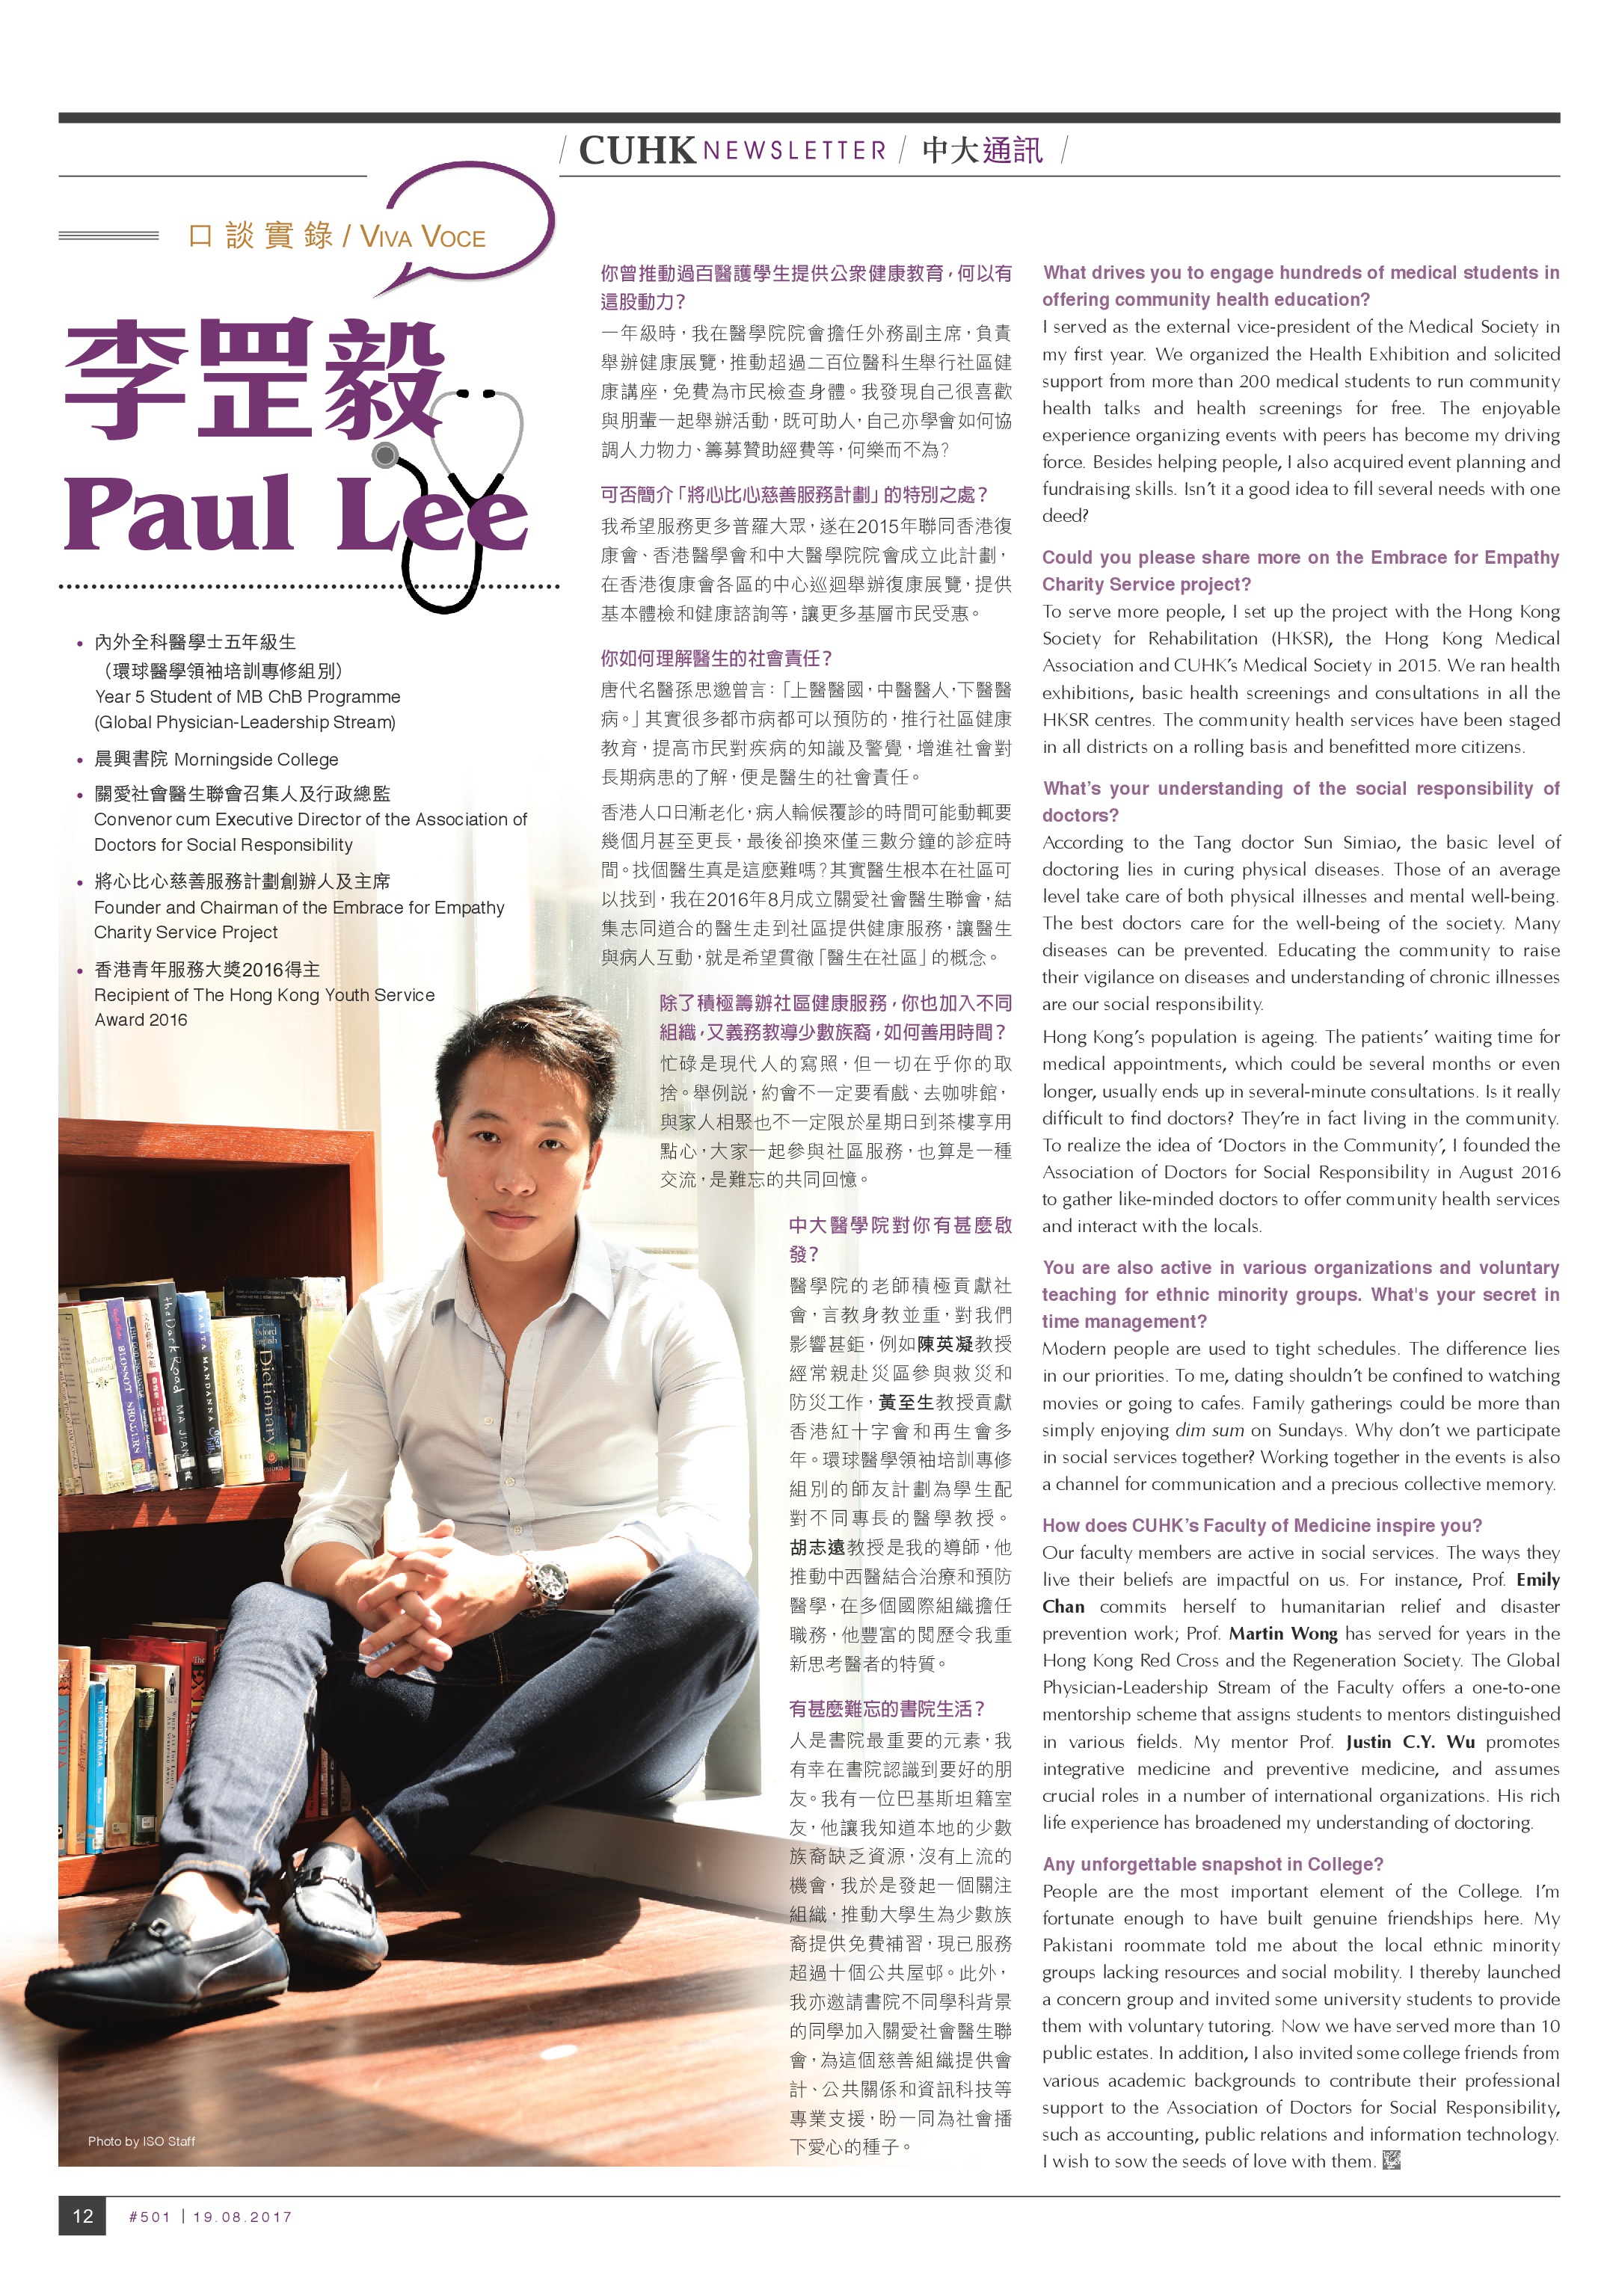 Paul Lee Interview